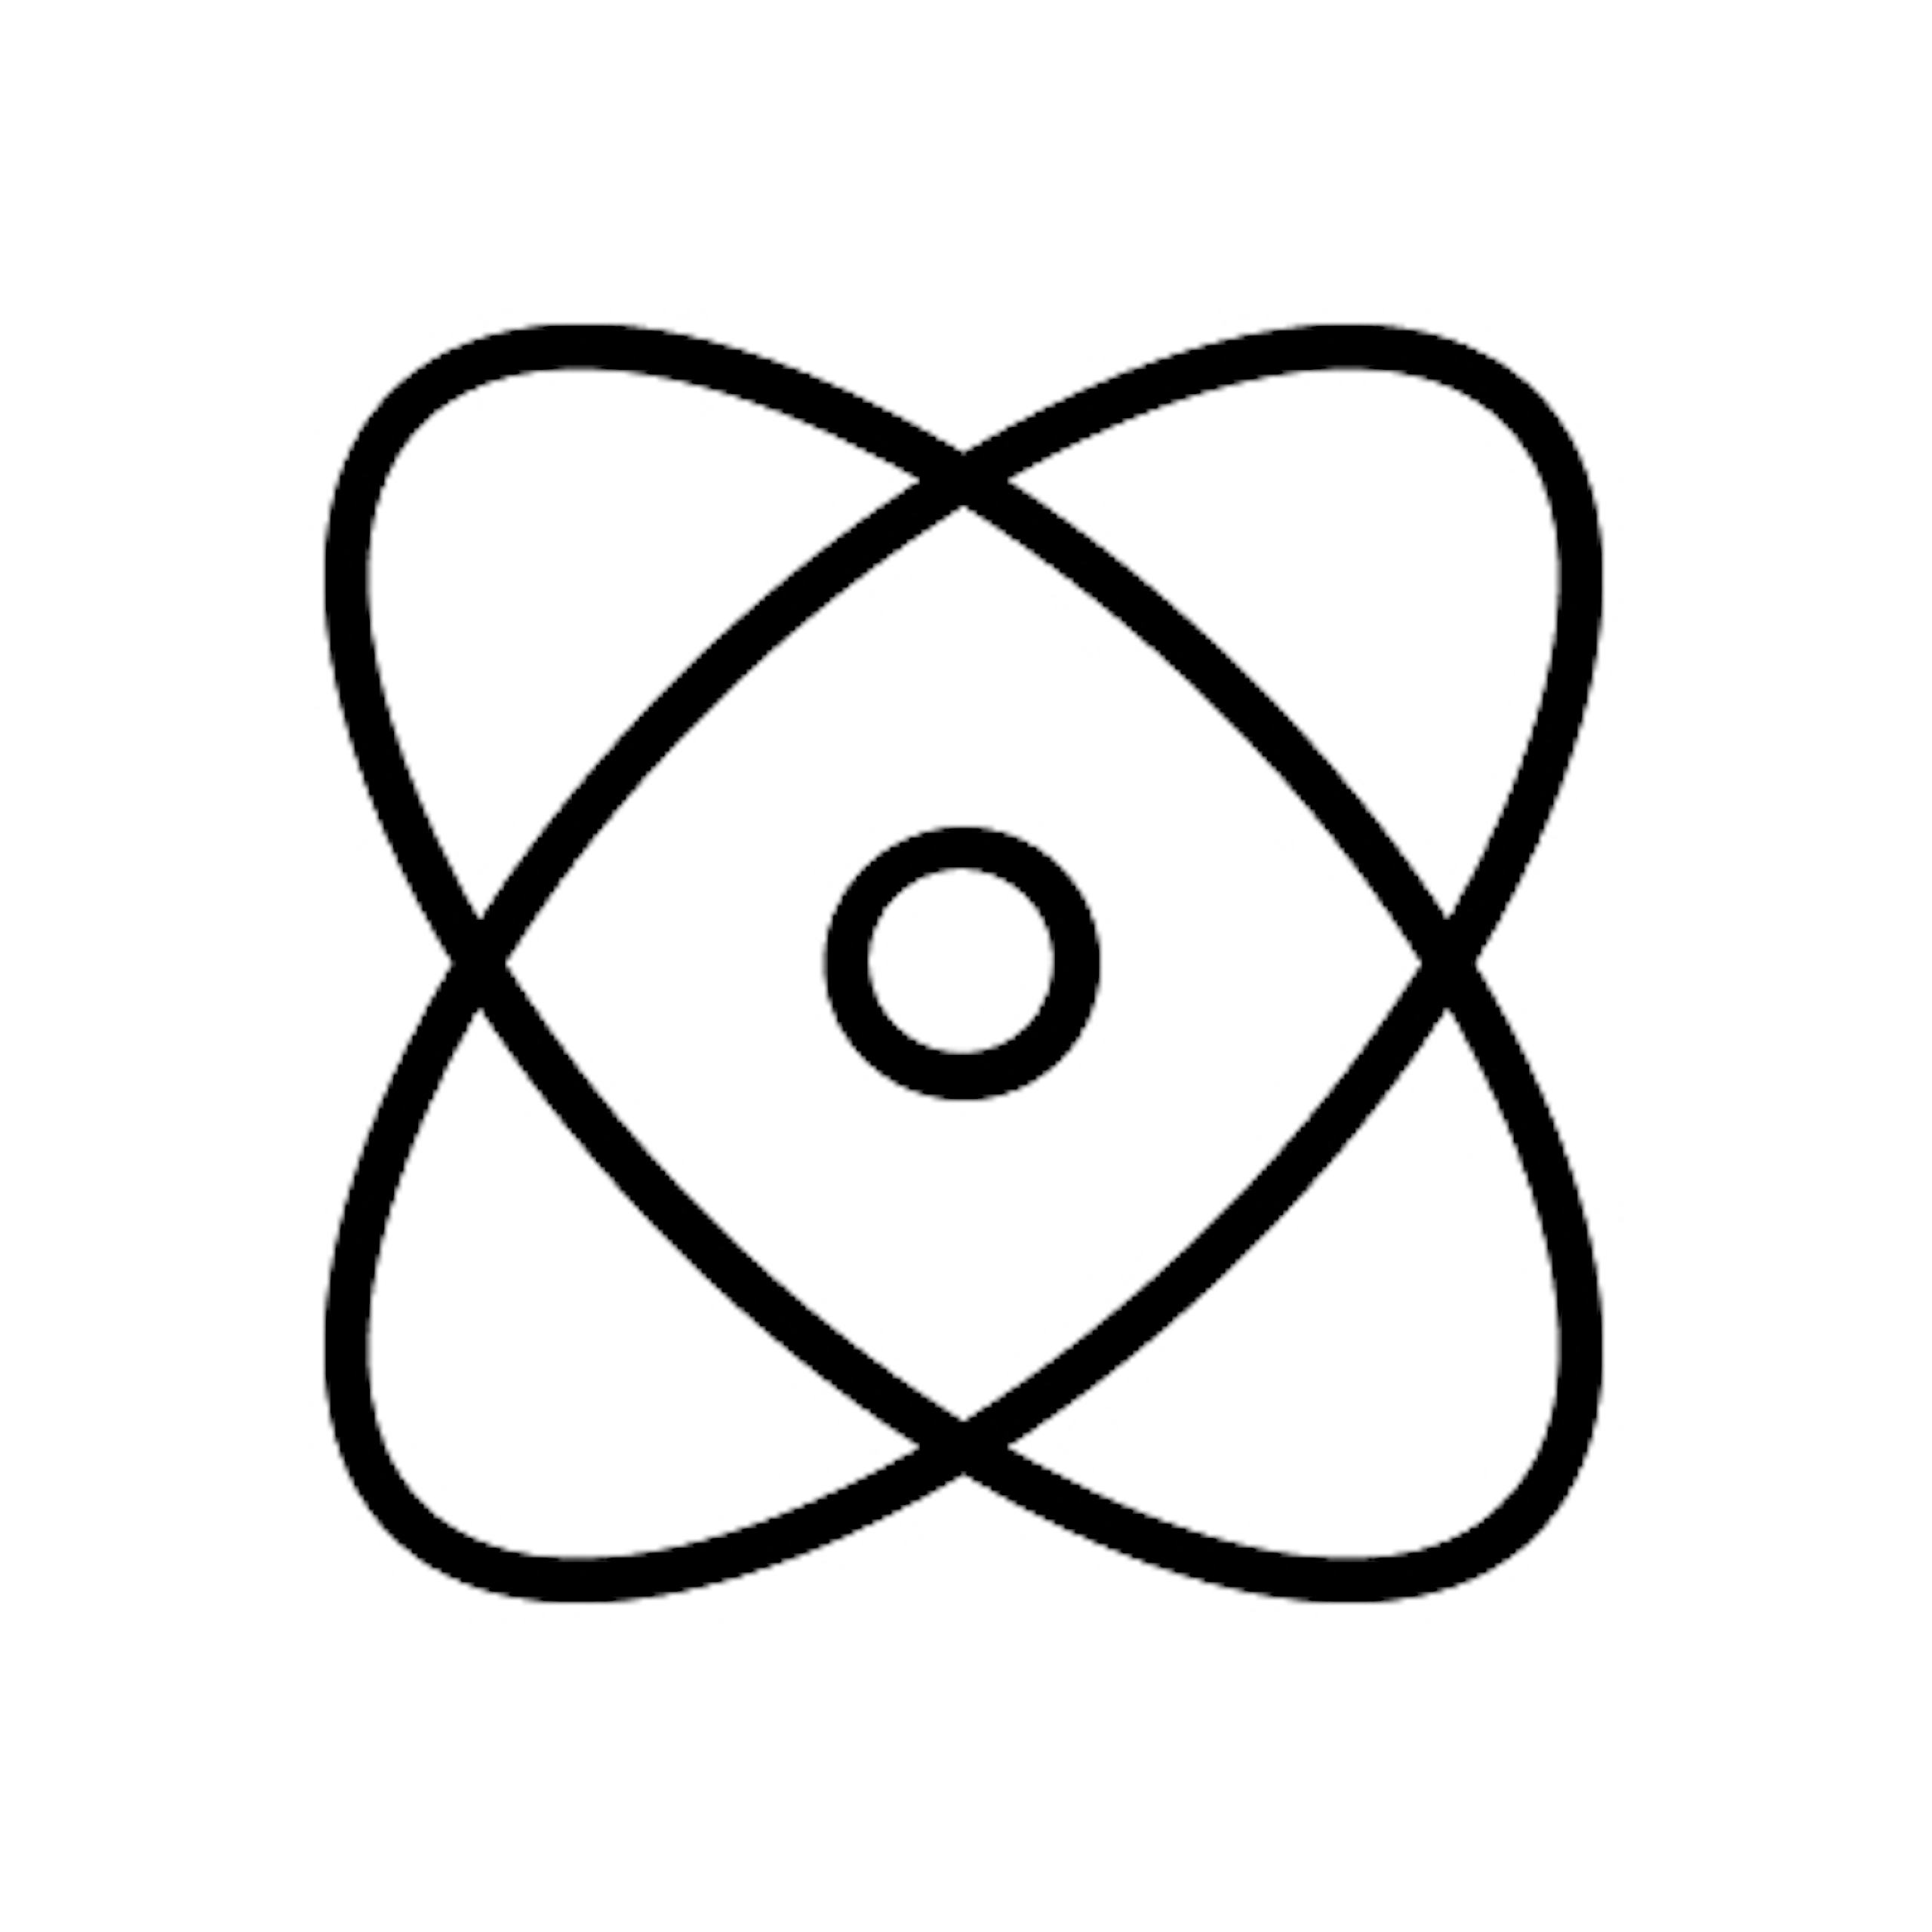 view Atom to represent positive energy